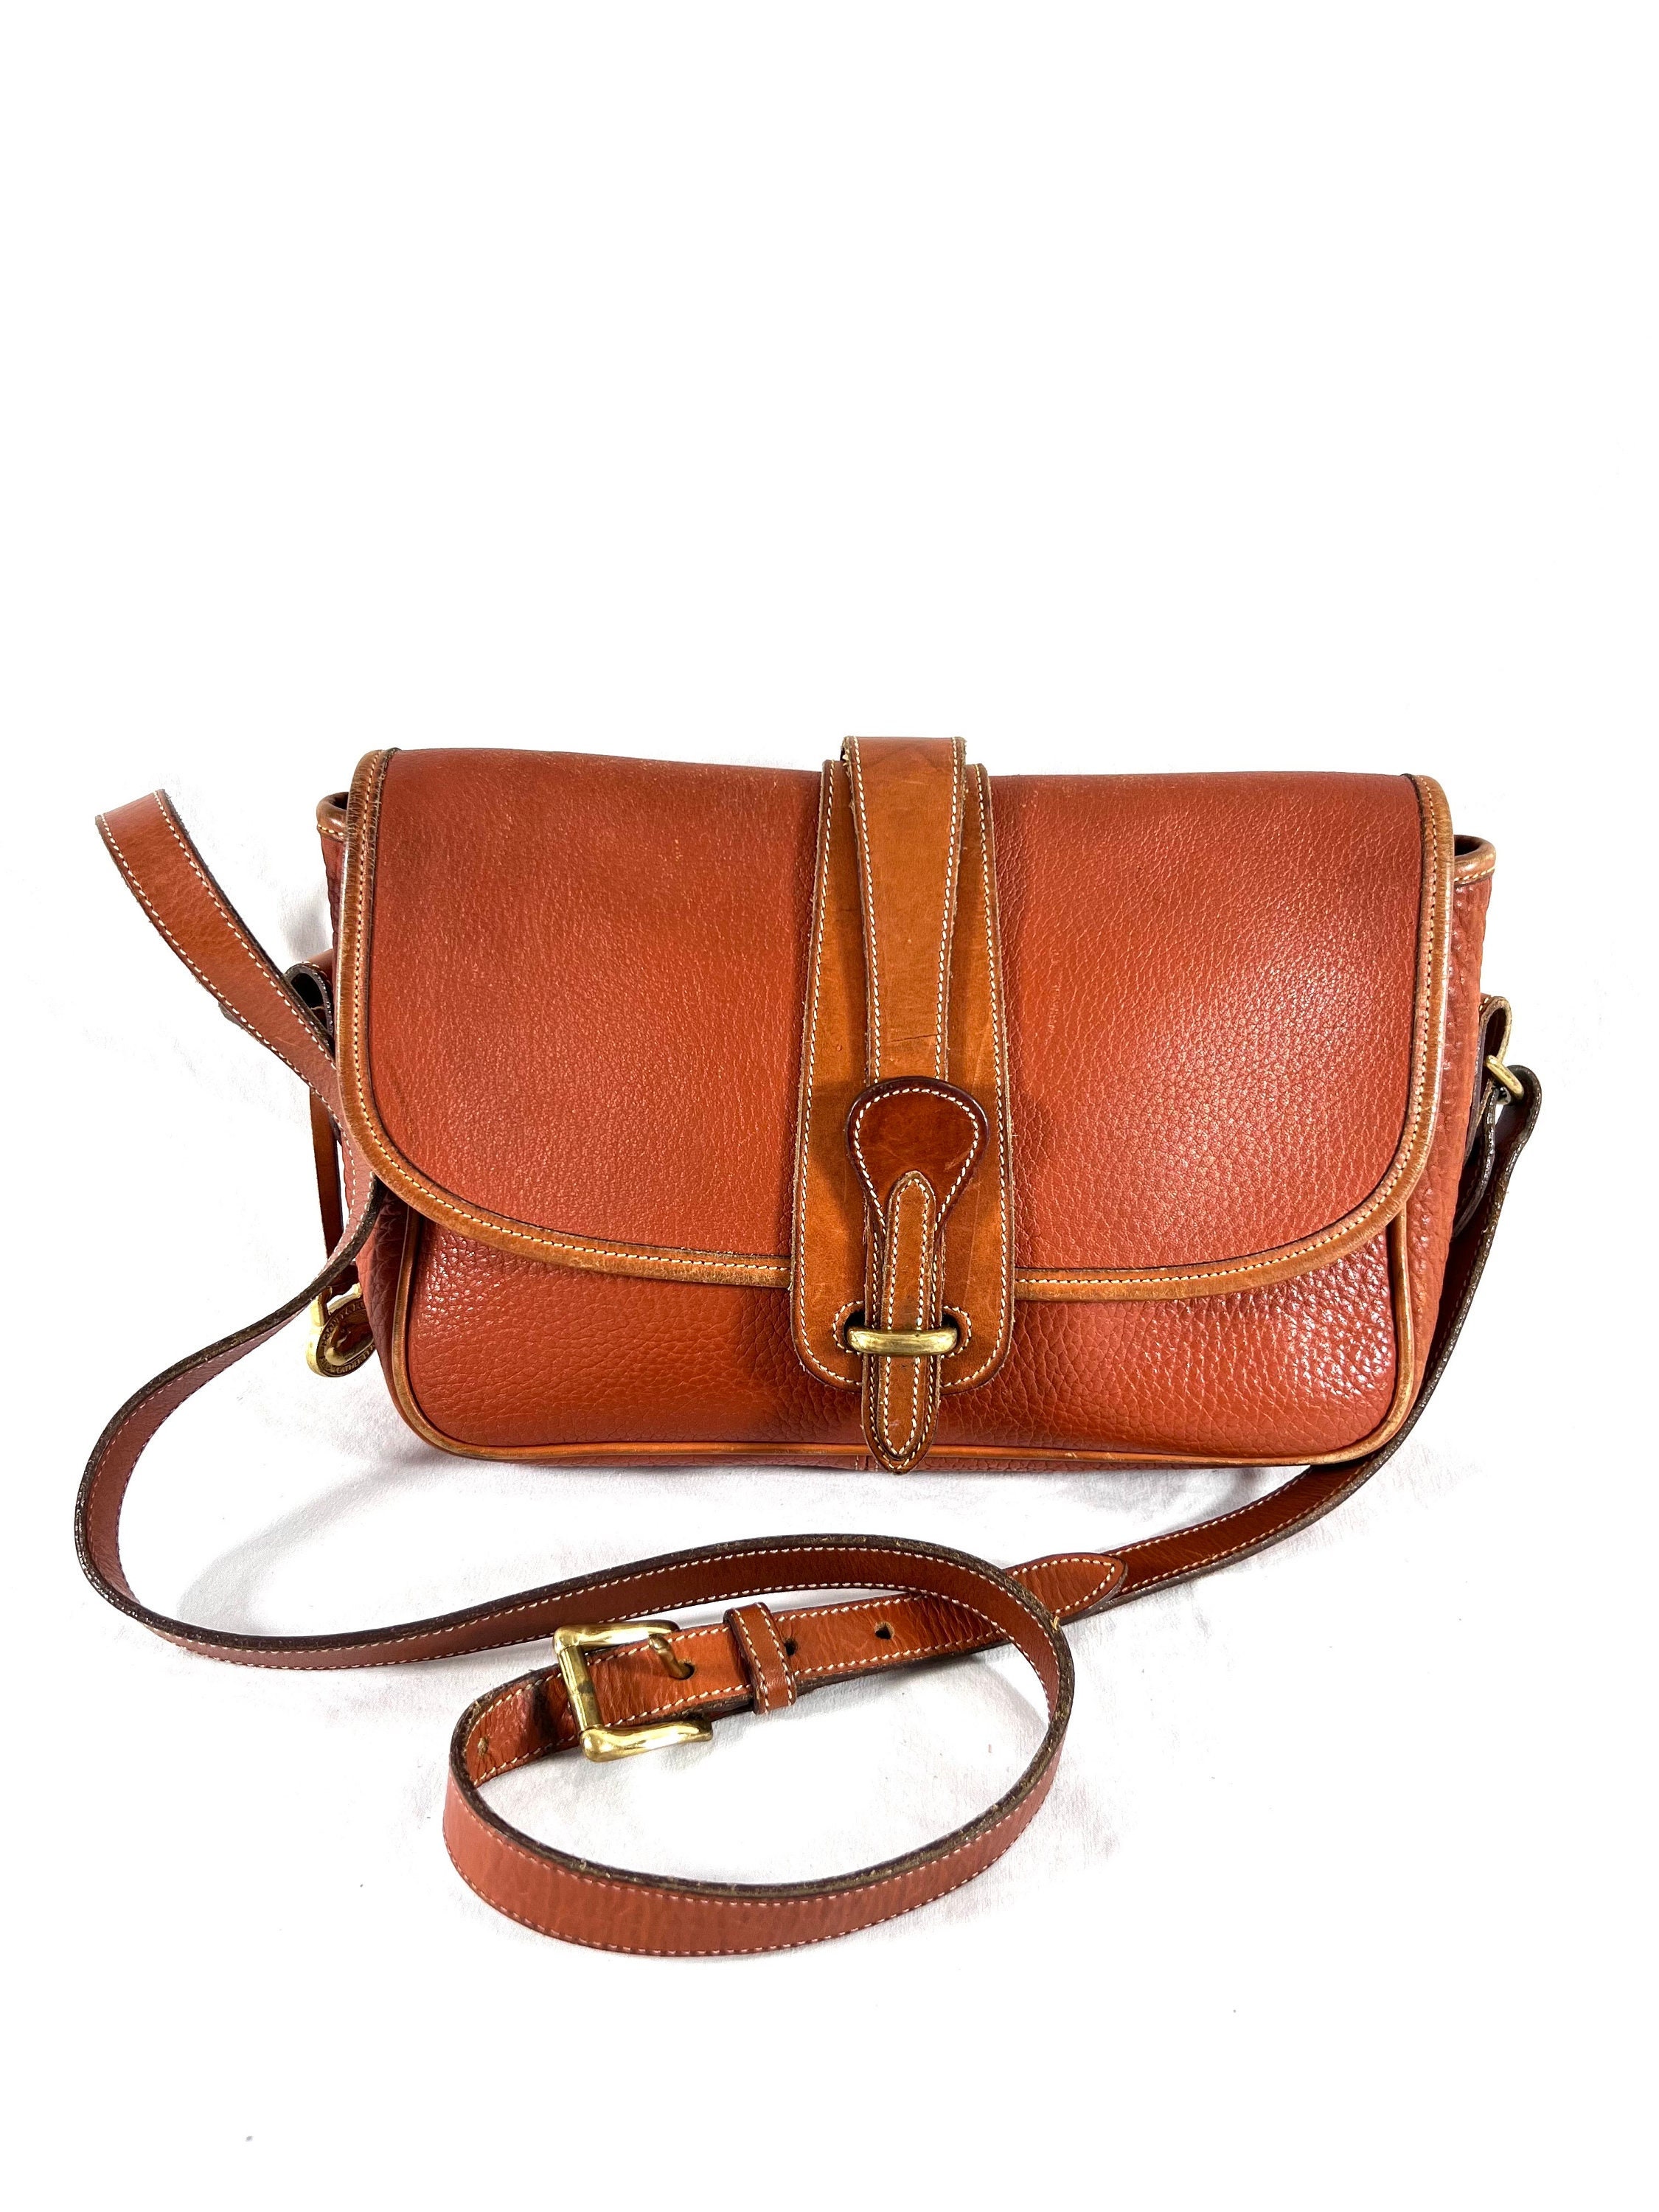 Vintage Dooney and Bourke, red pebble, leather satchel, style handbag